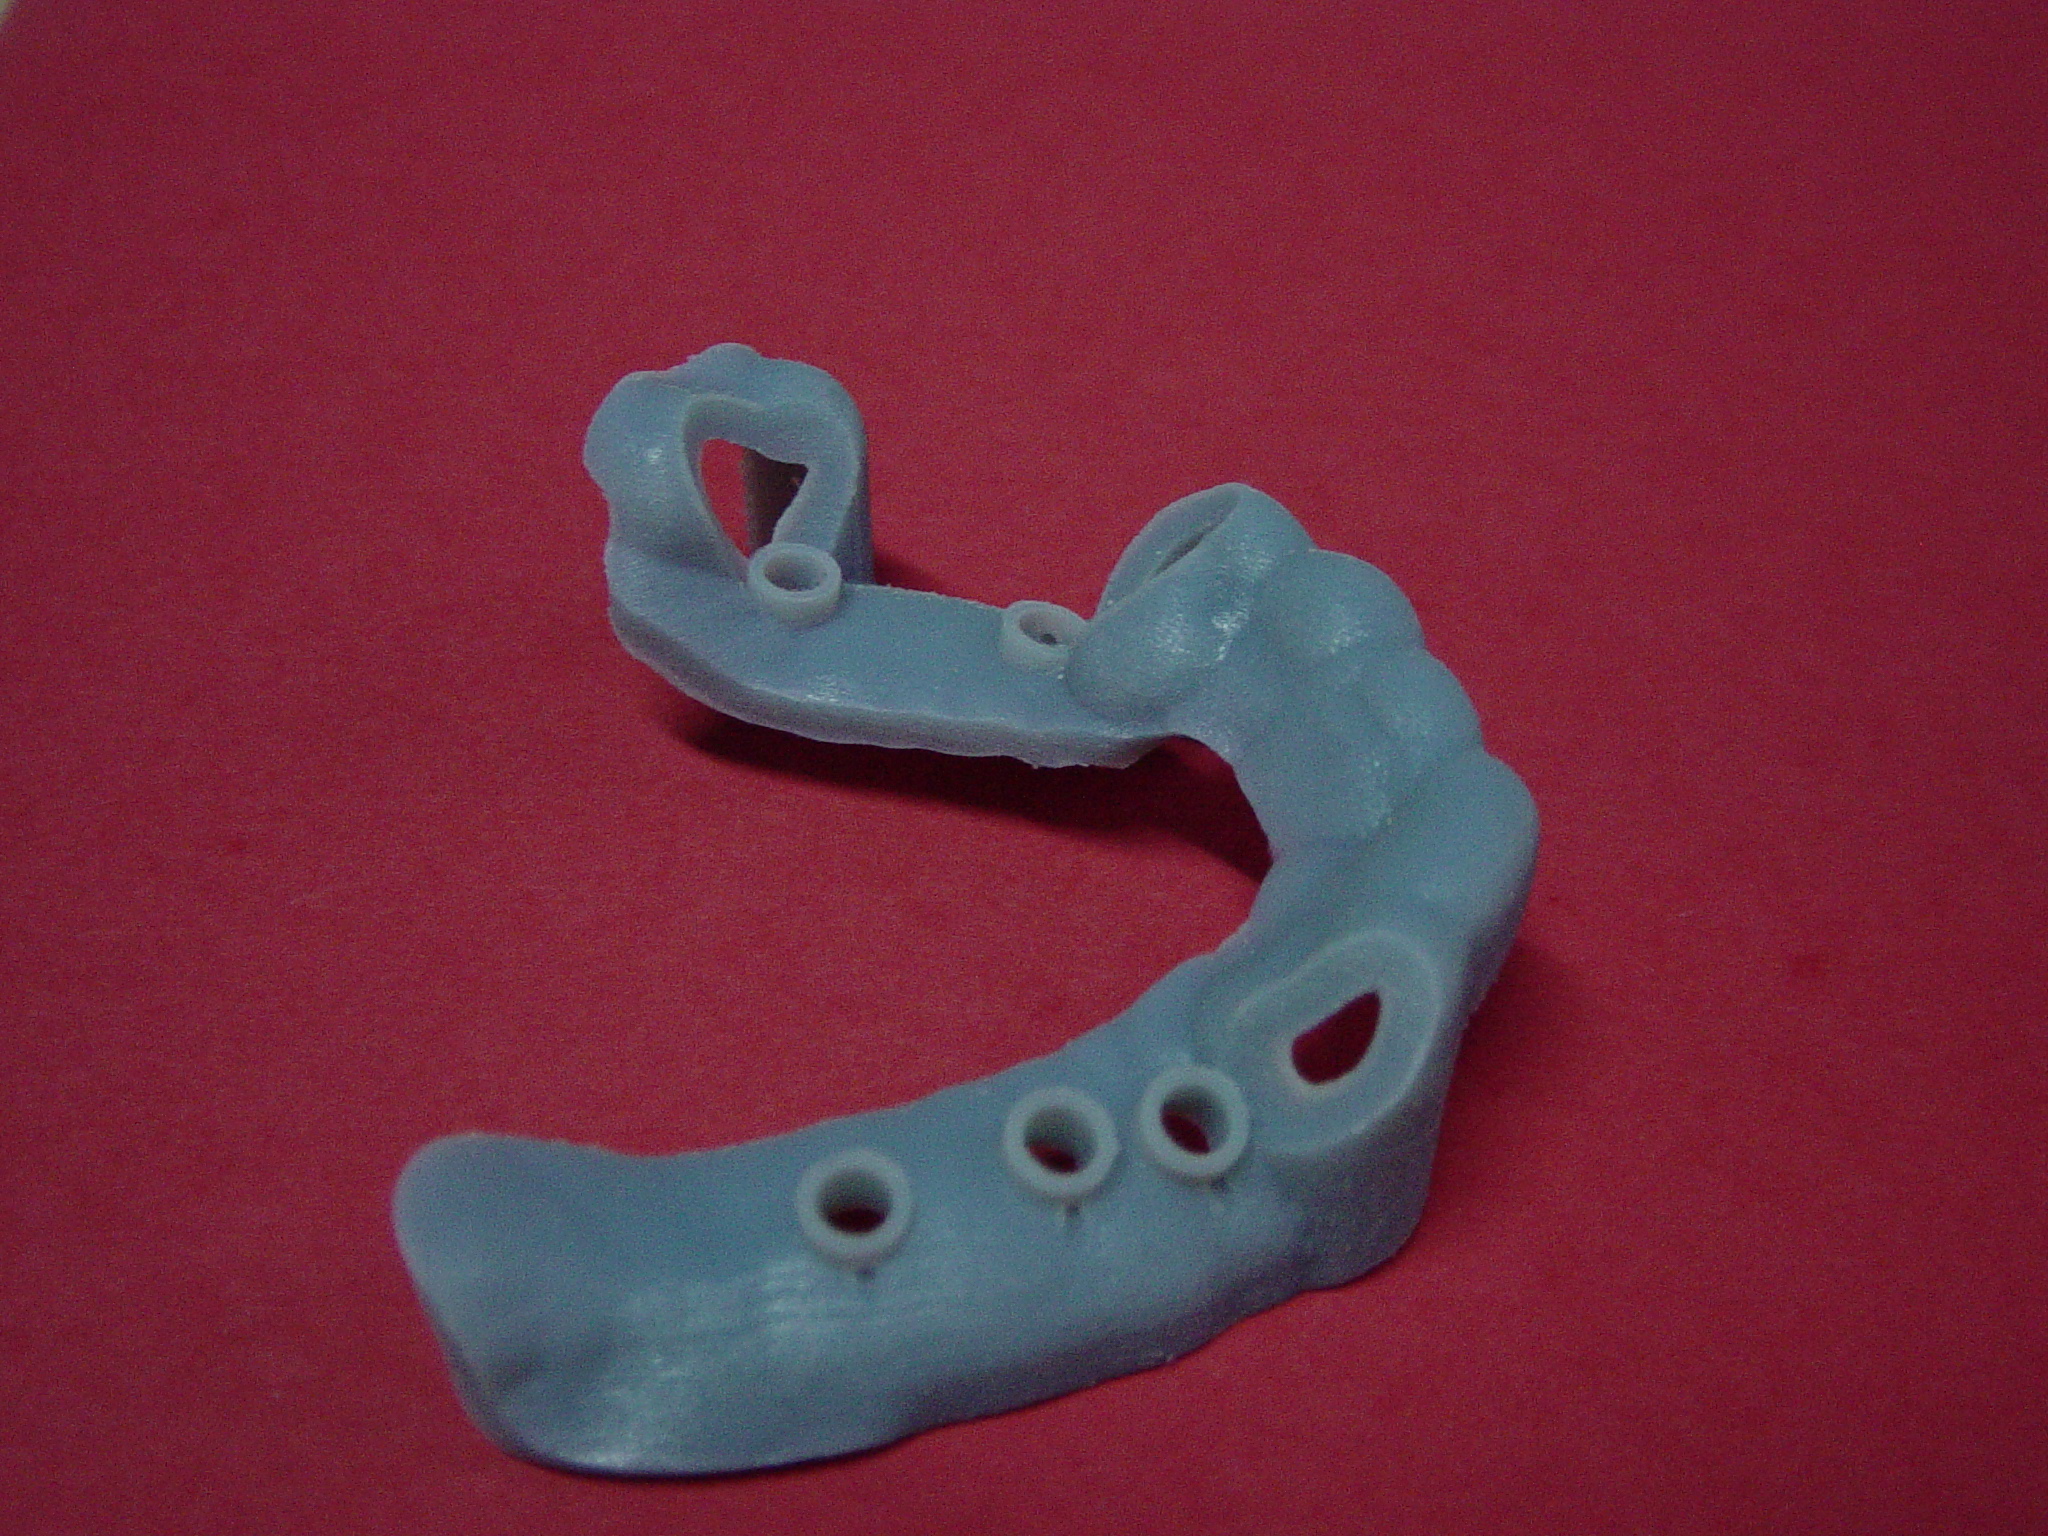 prototipo dental